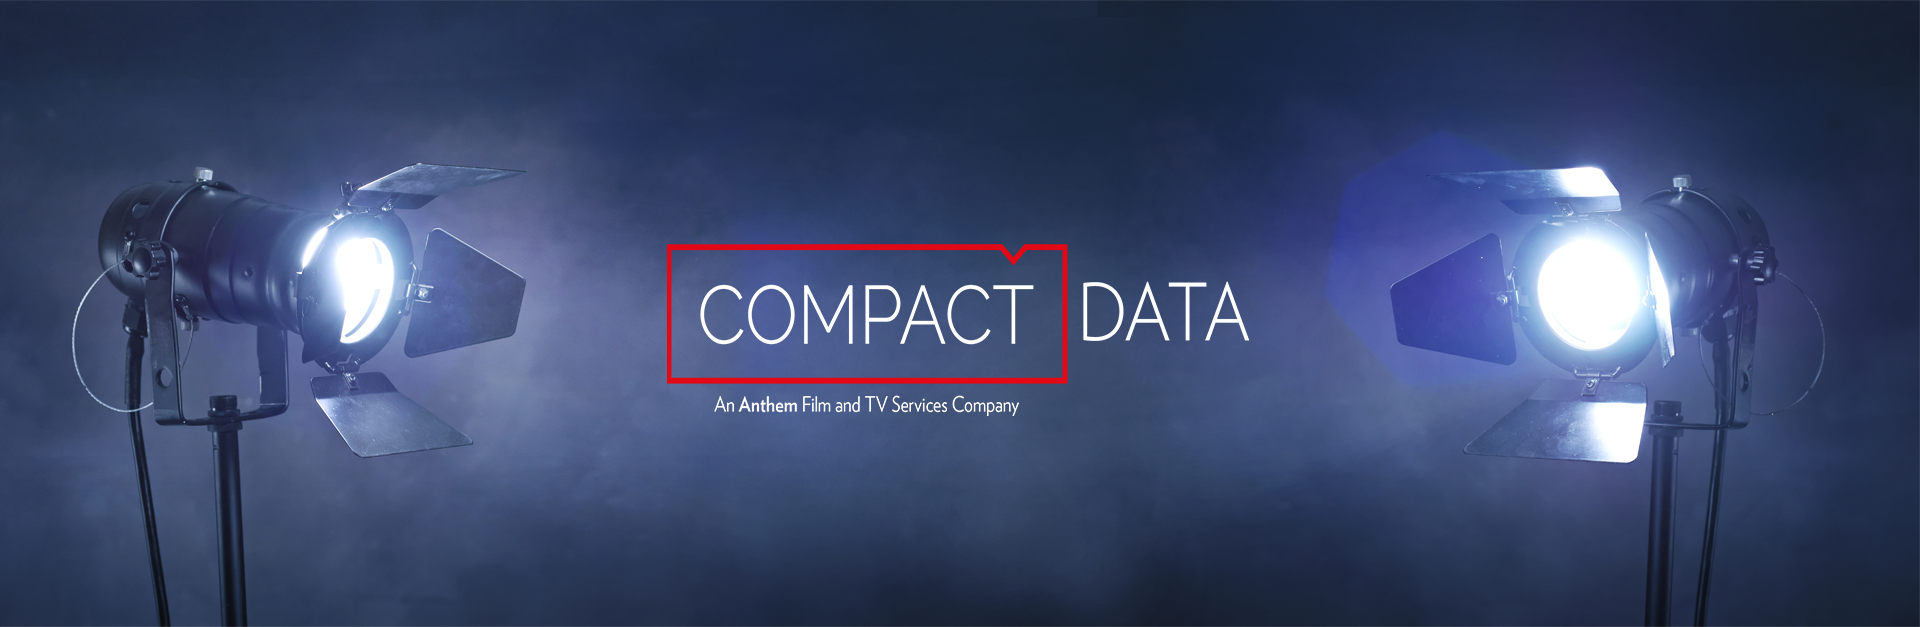 compact data